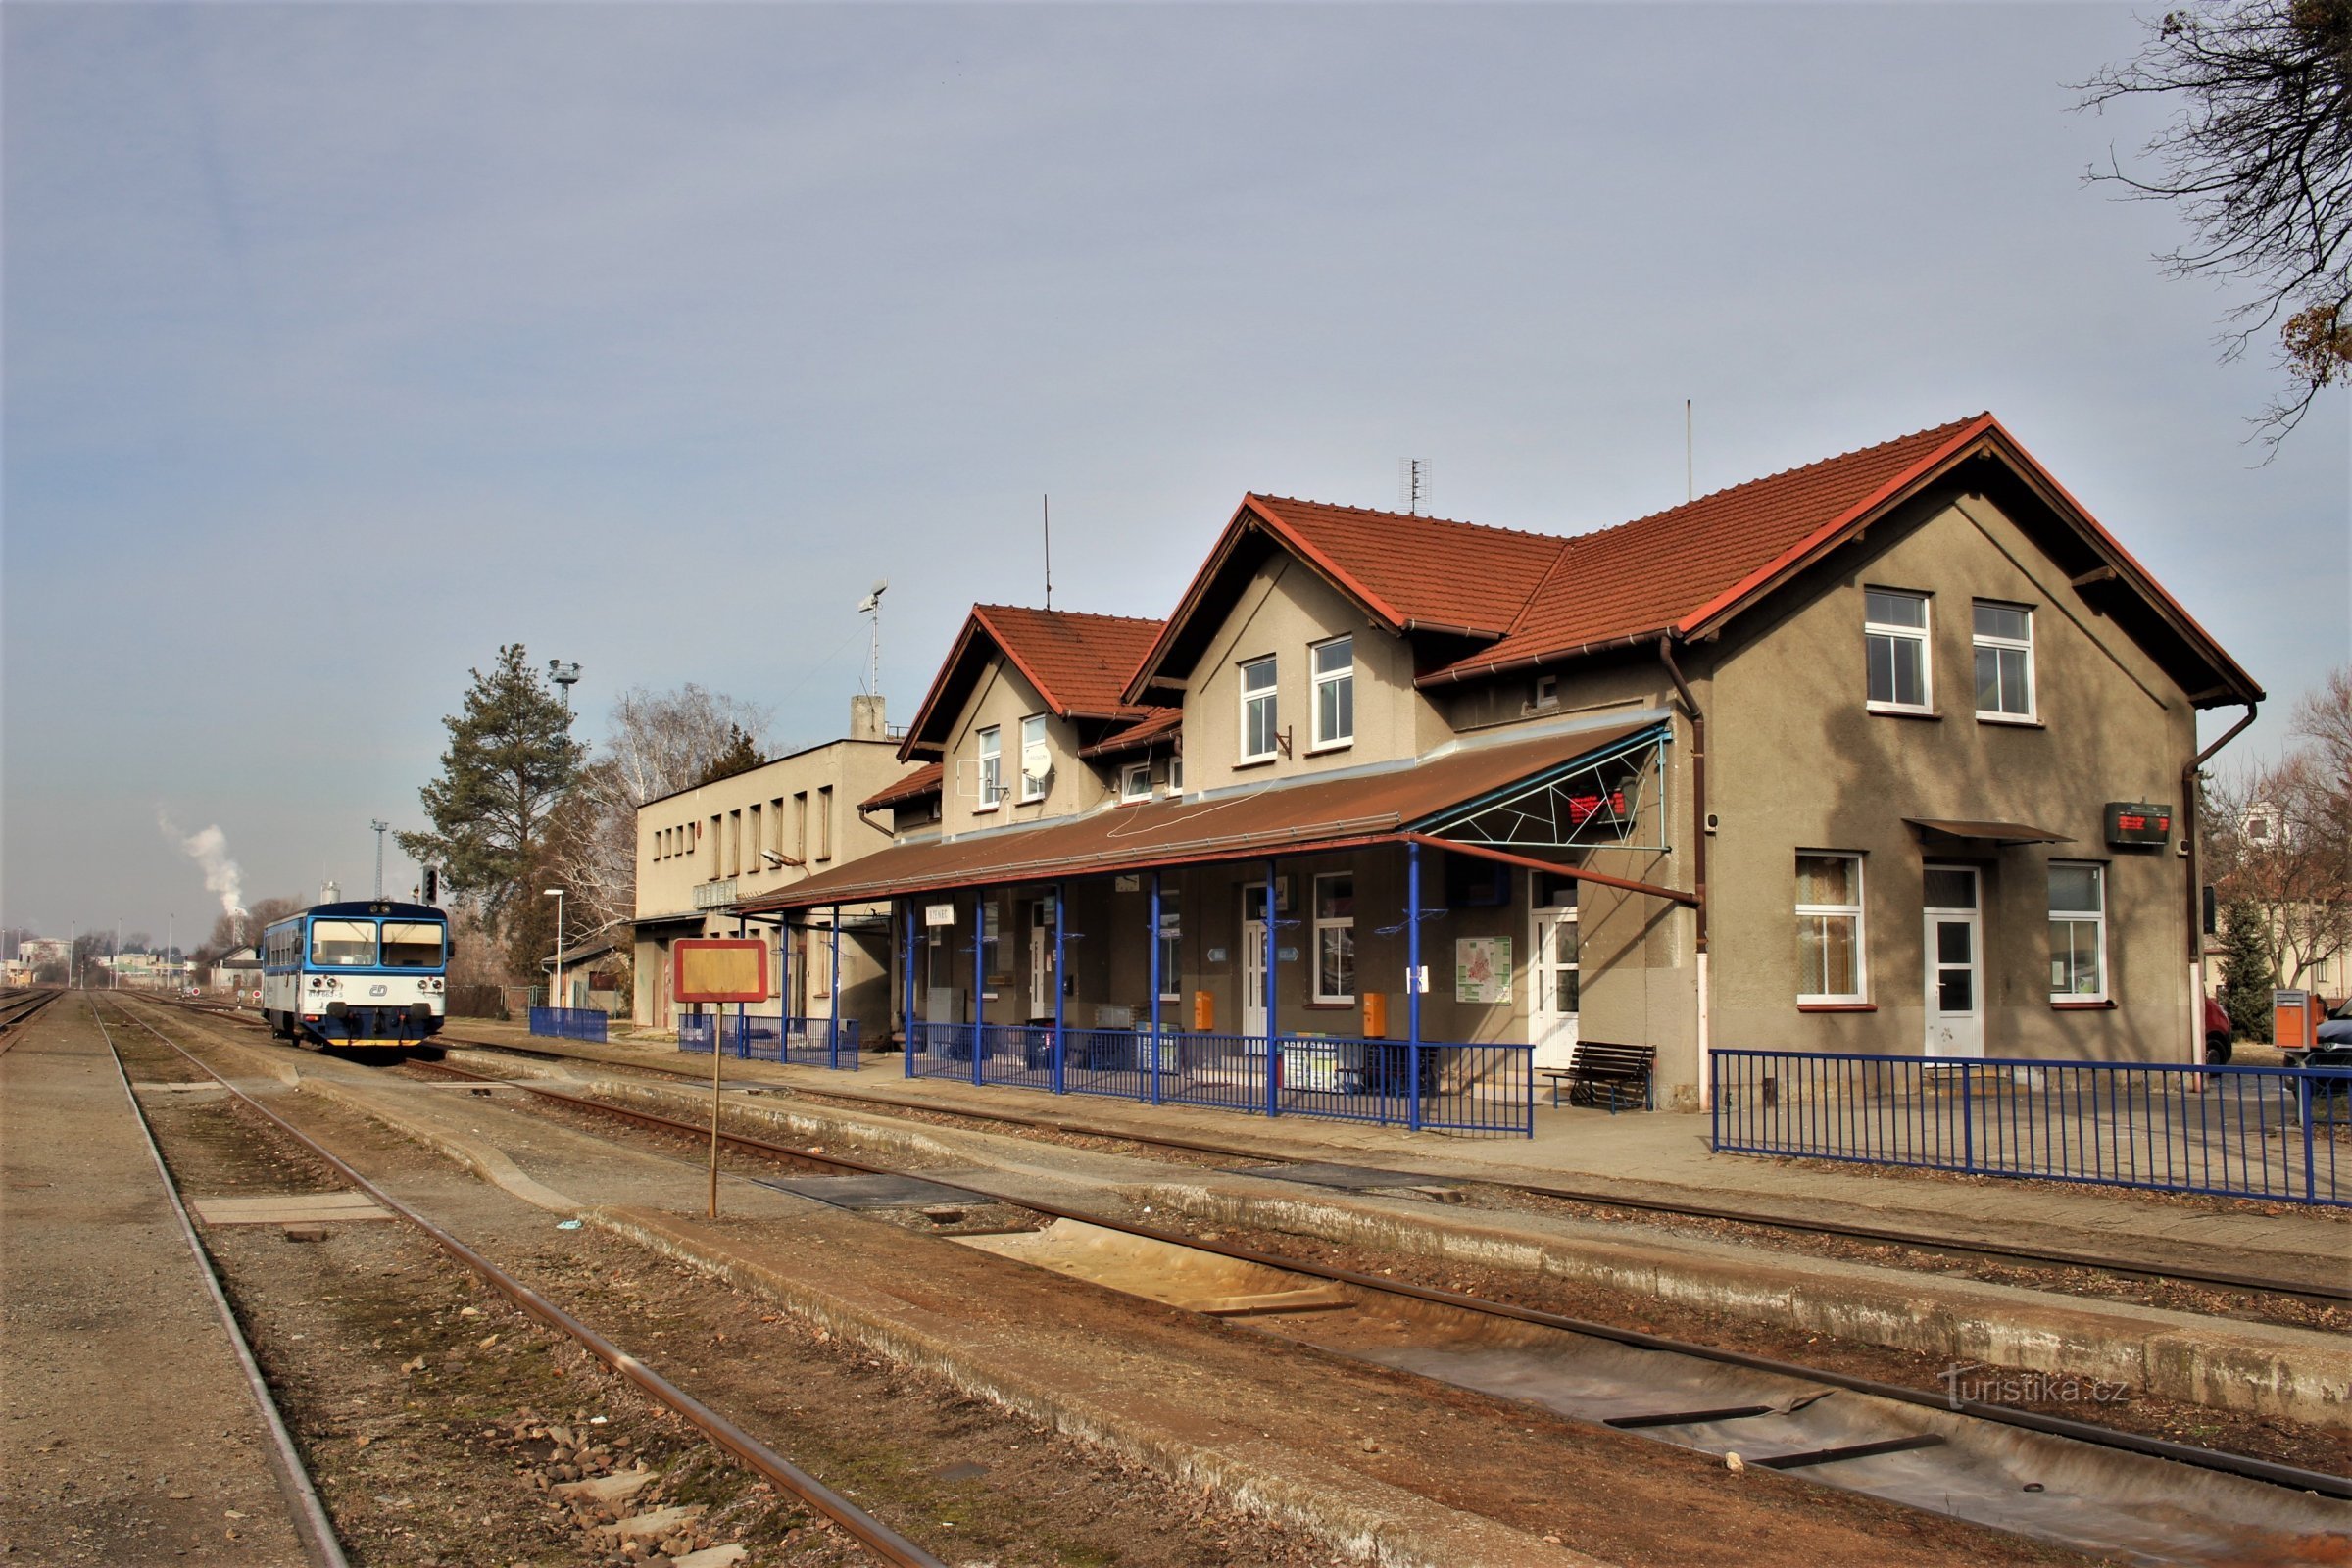 Railway station in Bzenec